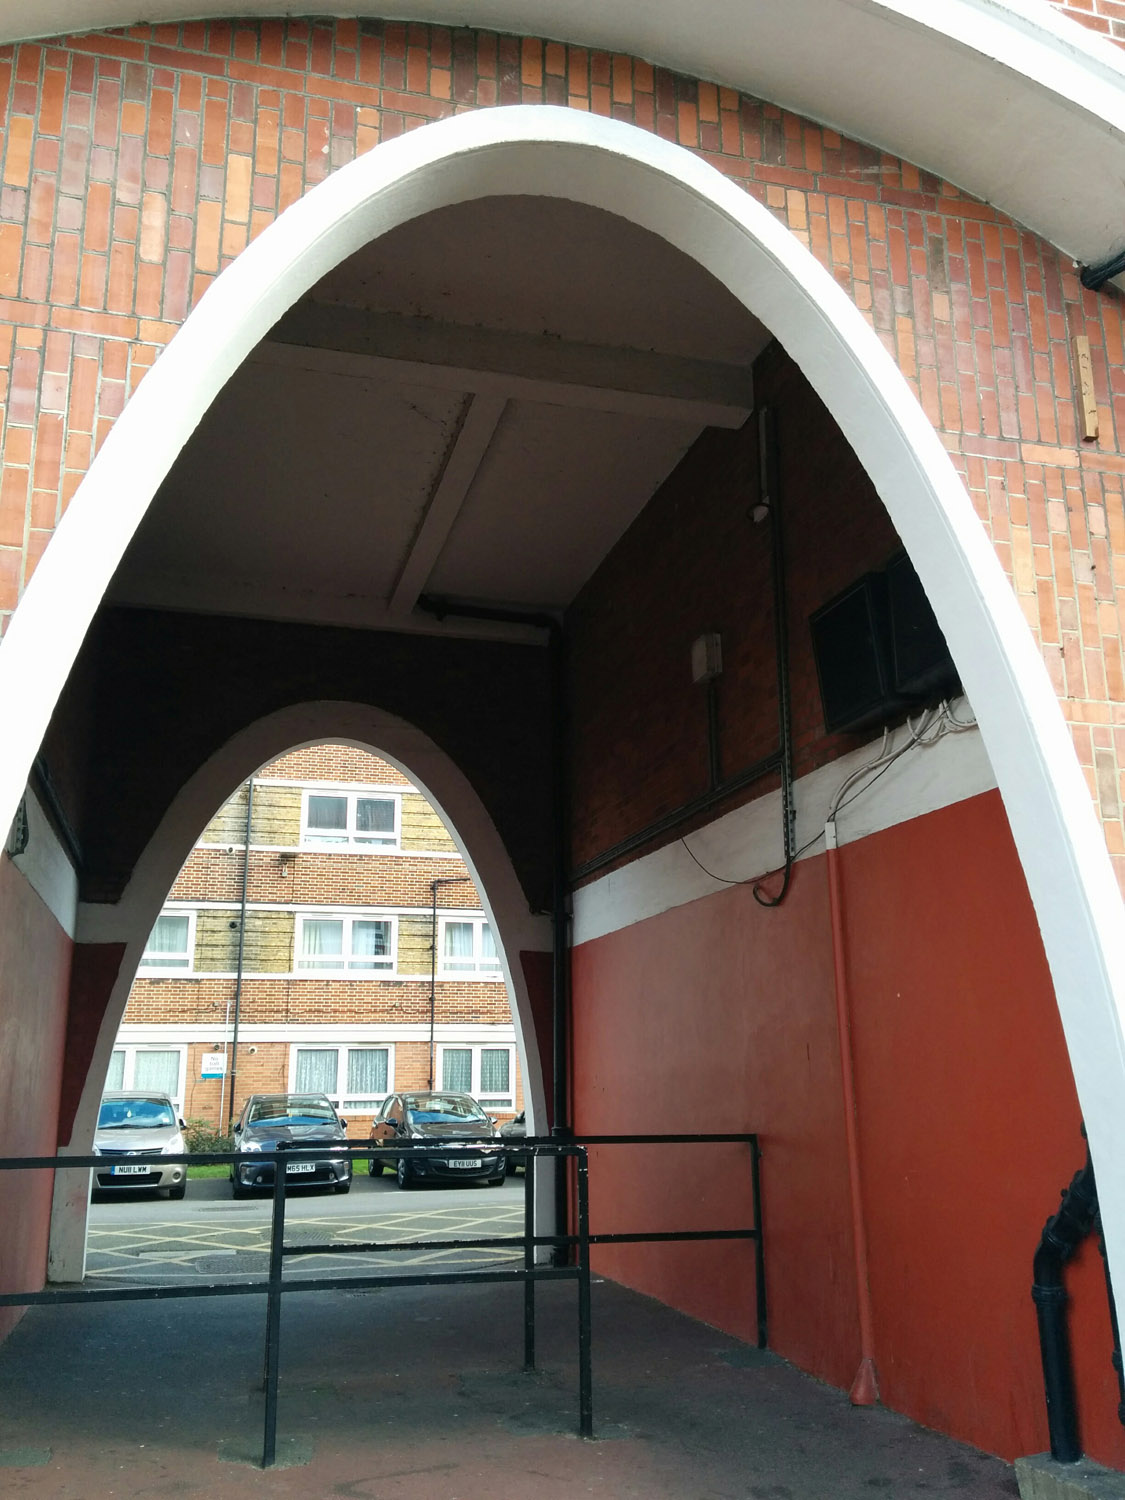 Neckinger estate arch